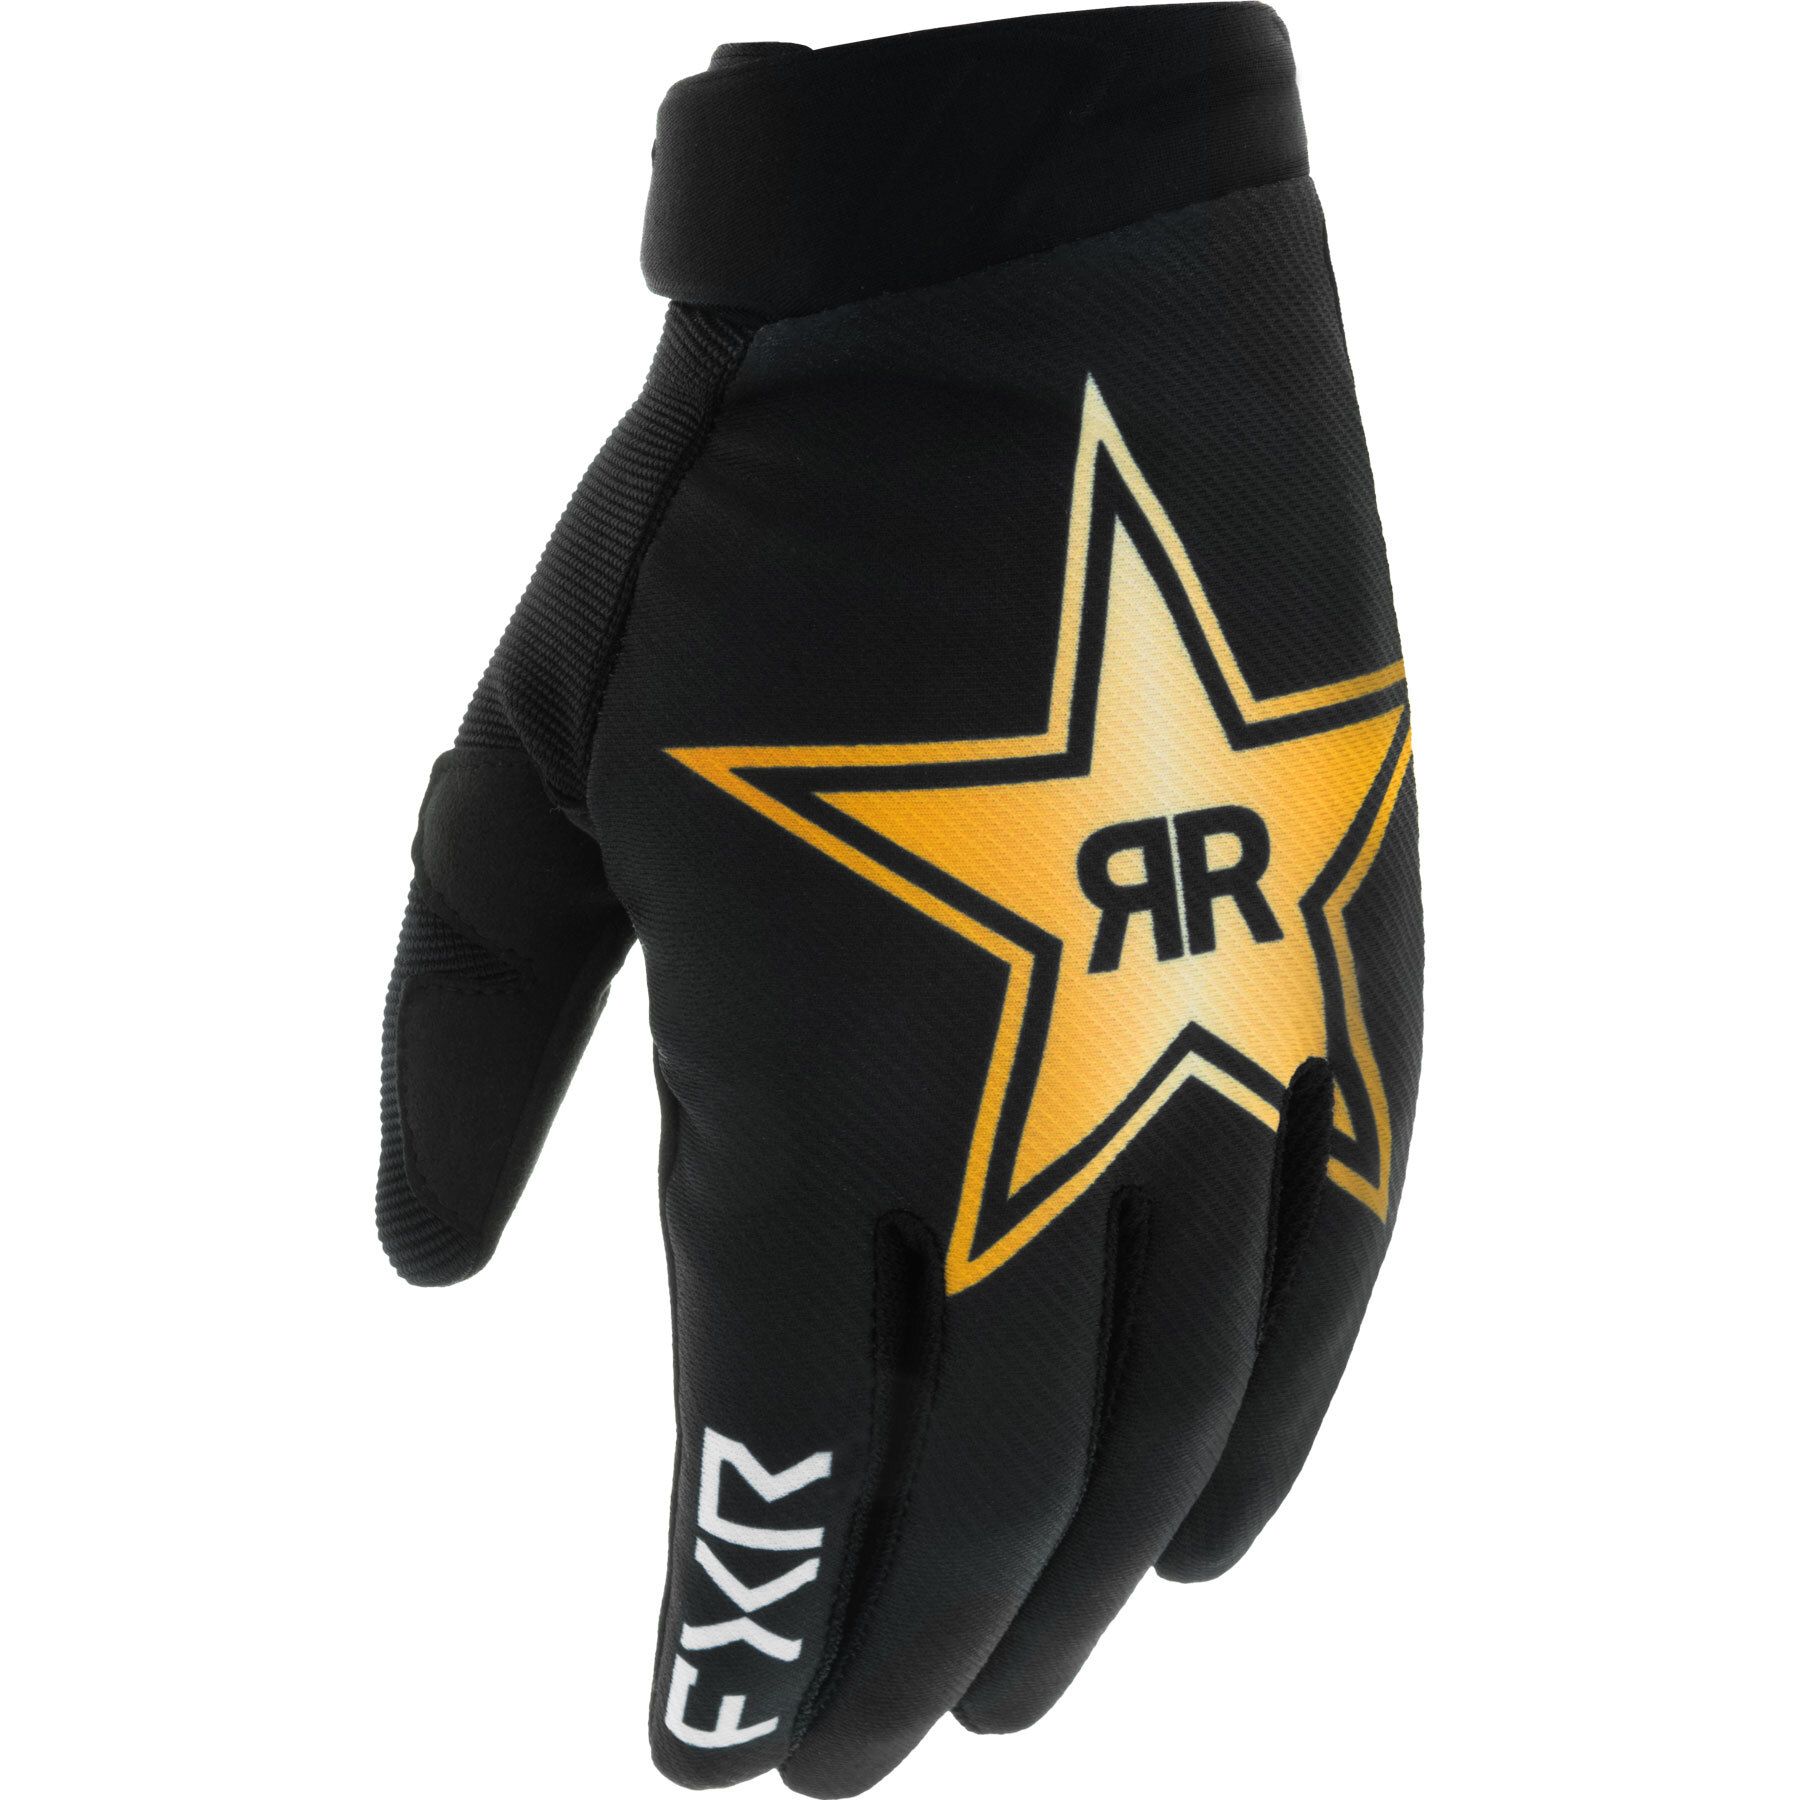 Reflex MX Gloves by FXR® Small black/gold